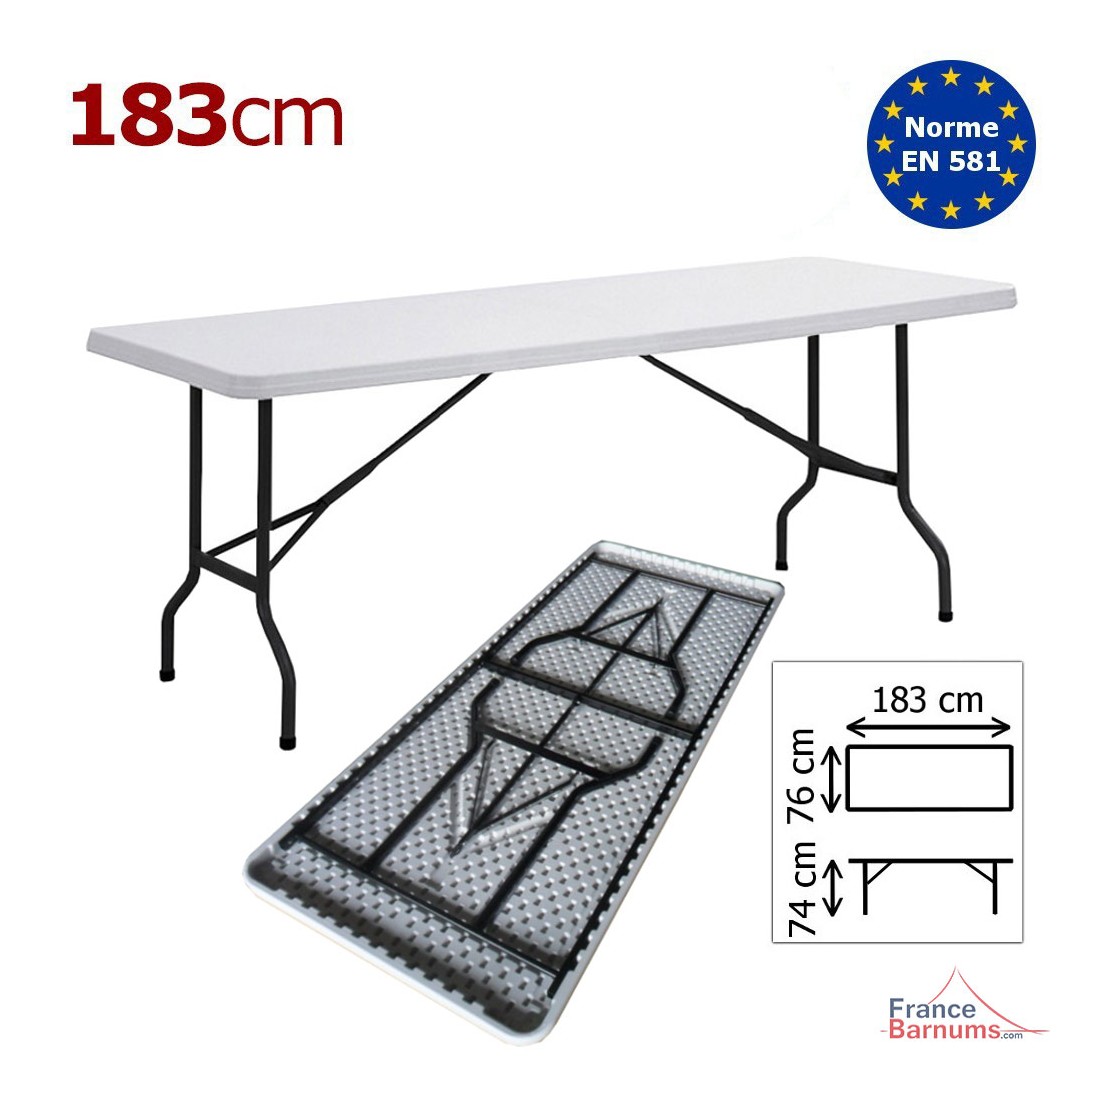 Table escamotable en mélaminé blanc pour tiroir de 900mm (3900)